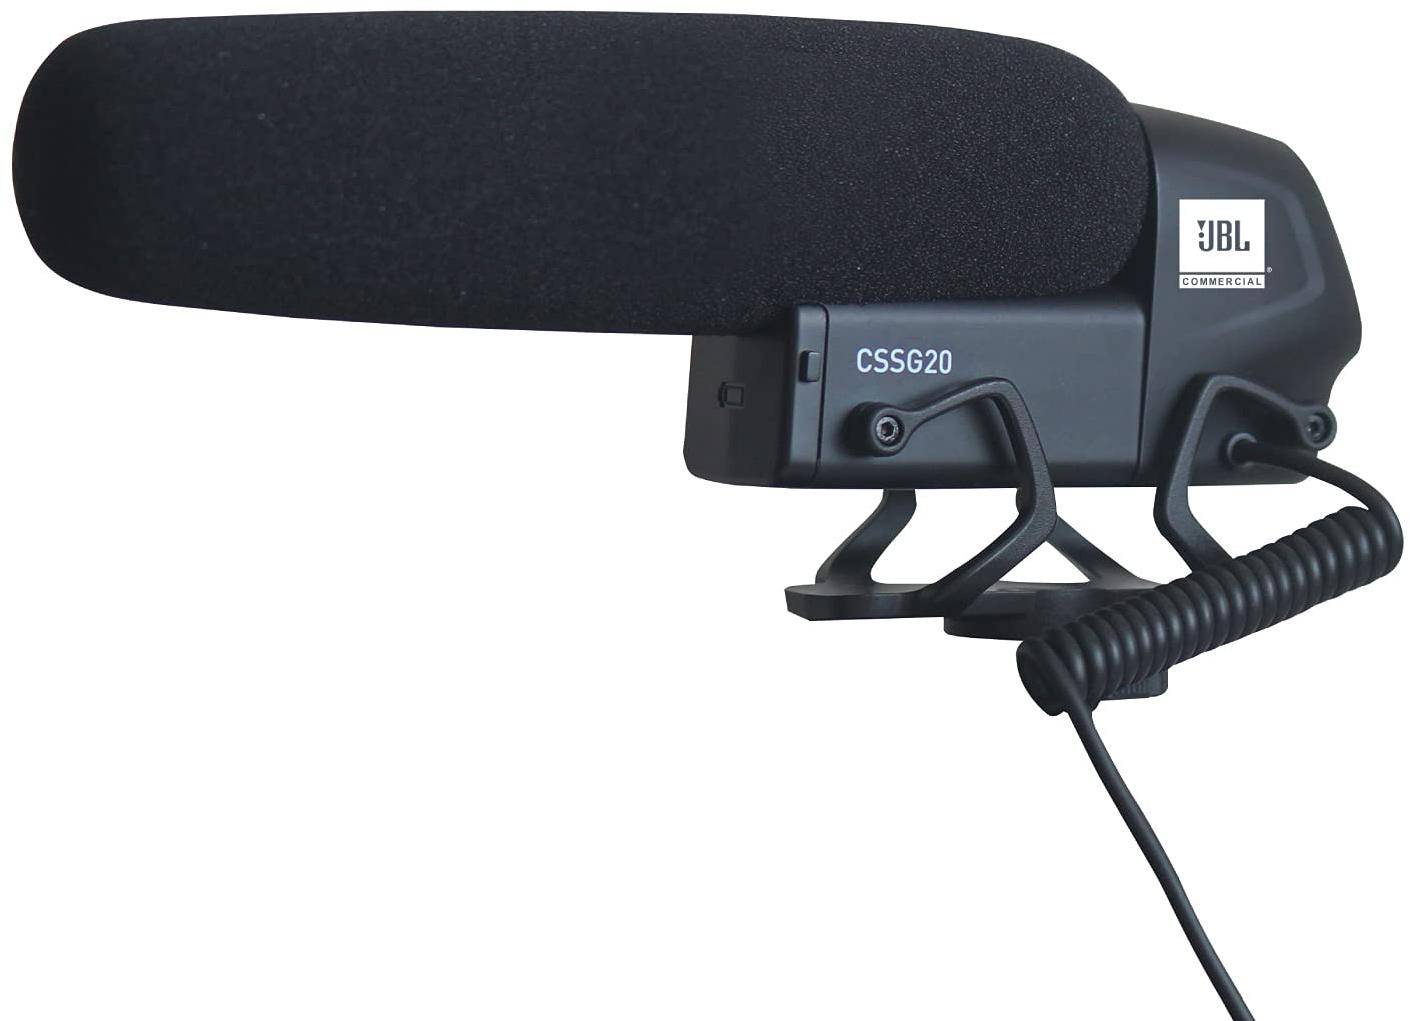 JBL Commercial CSSG20 On-Camera Shotgun Condenser Microphone for Cameras & Smartphones zoom image